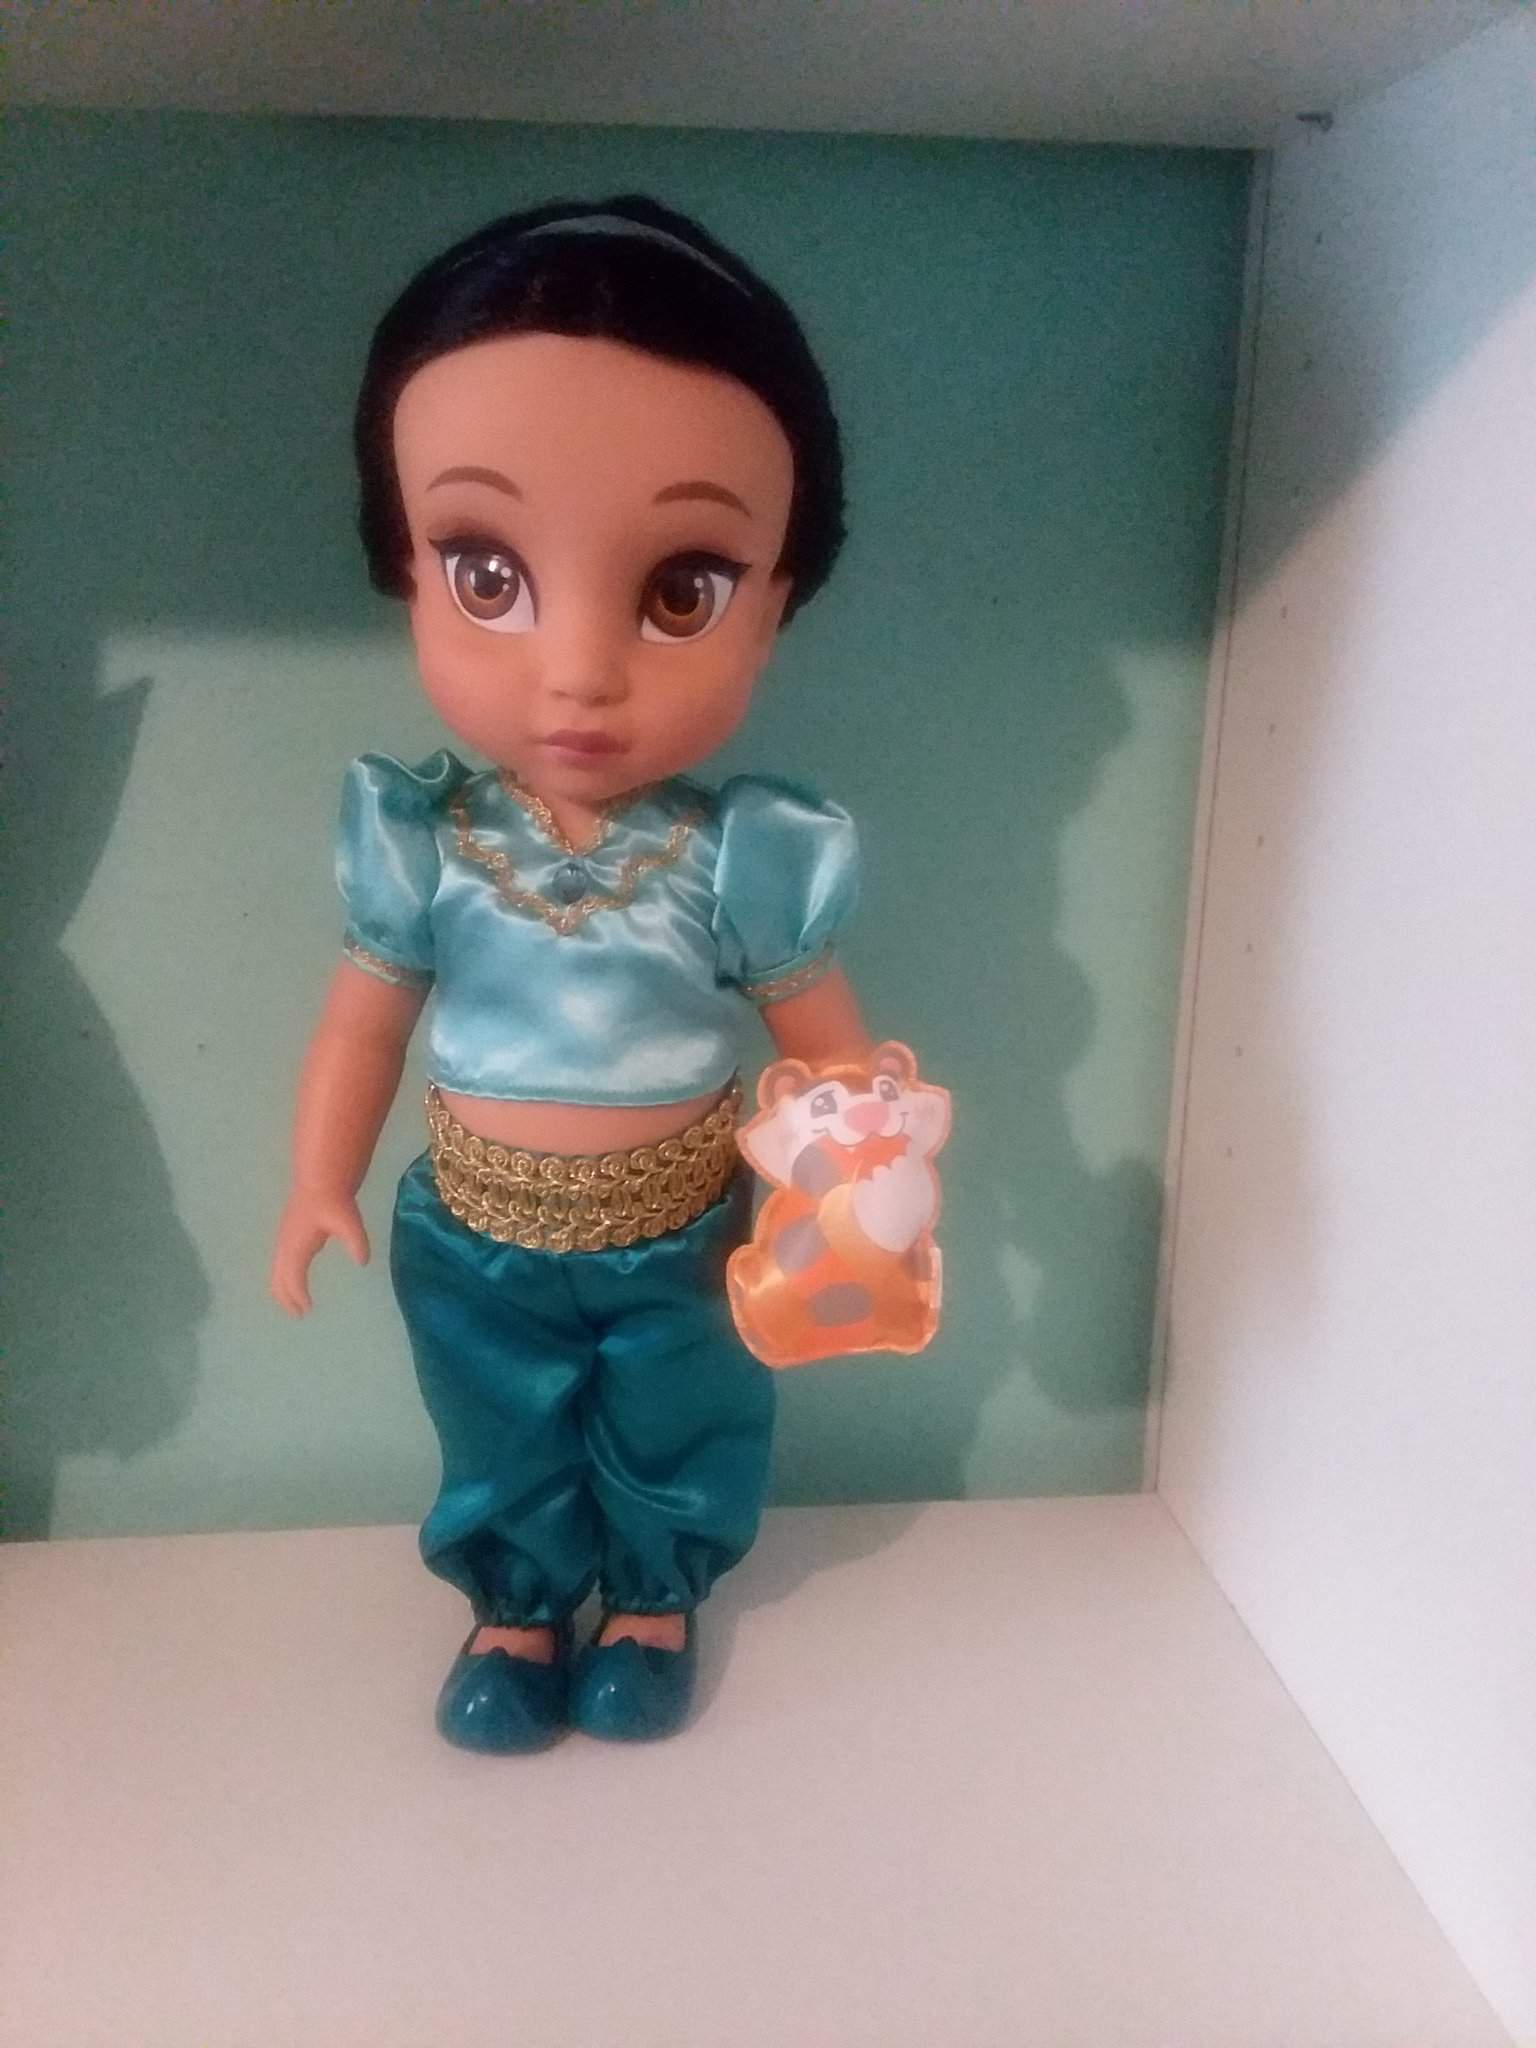 jasmine animator doll